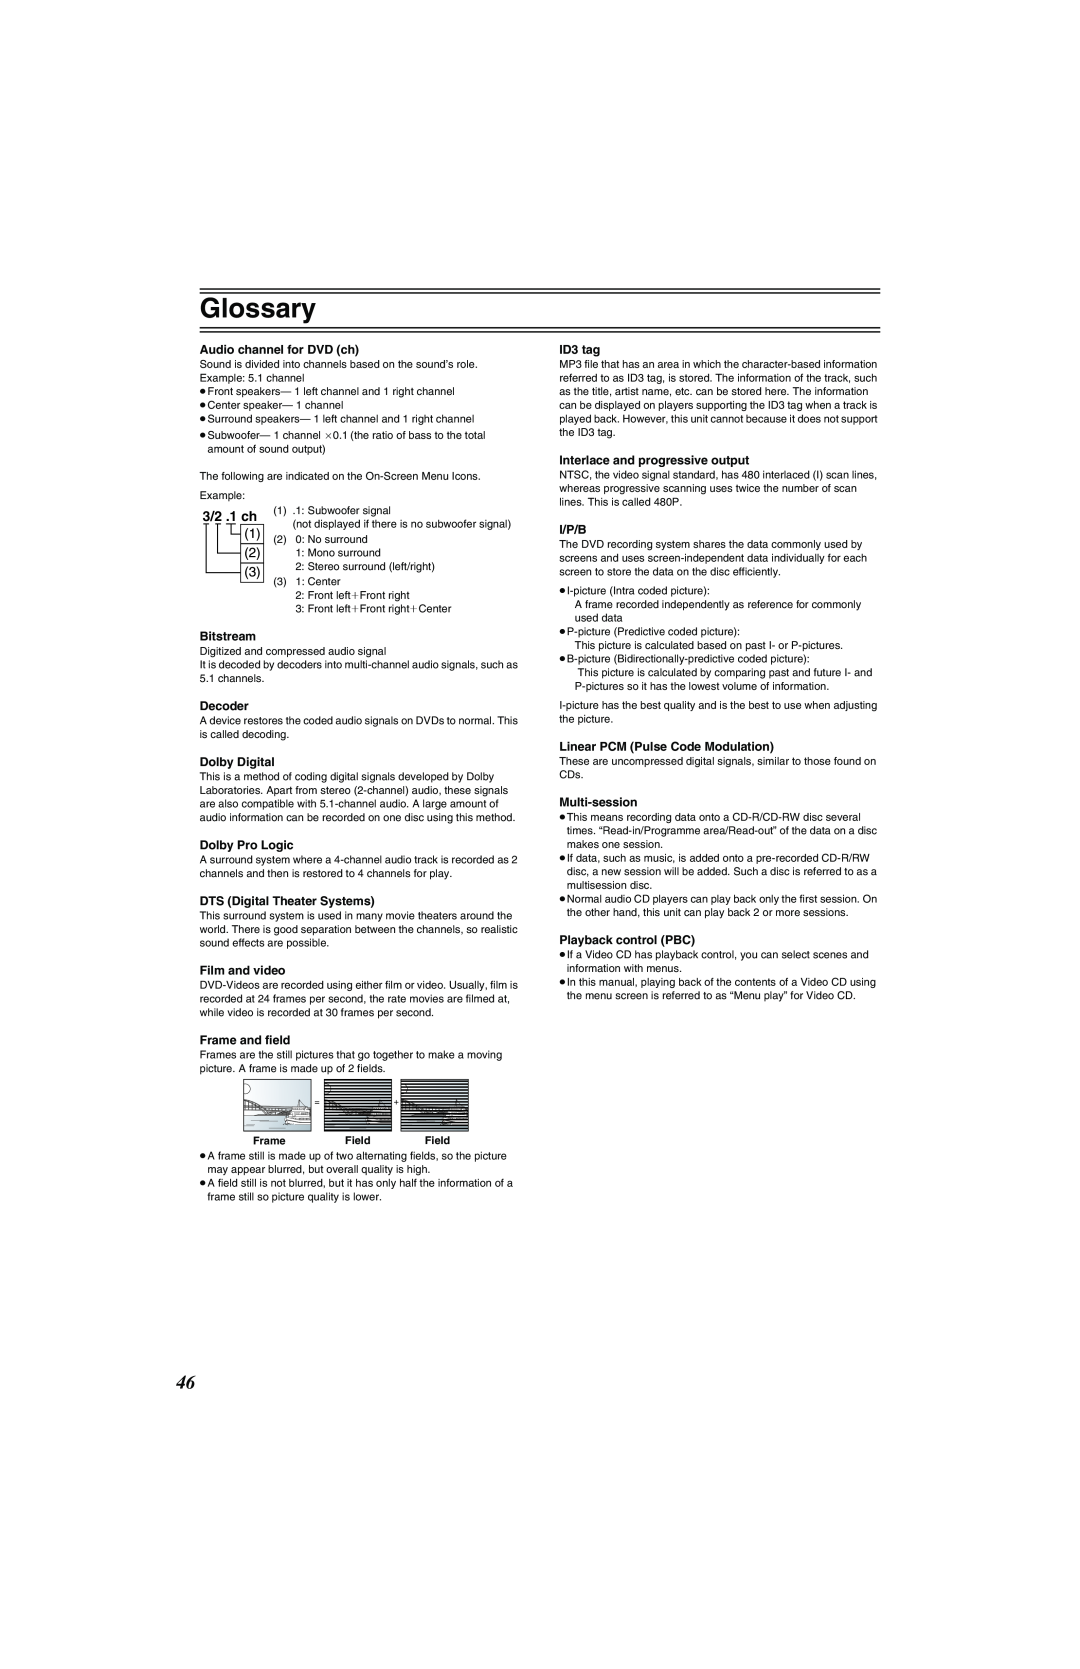 Panasonic NV-VP32 Series manual Glossary, 3/2 .1 ch 